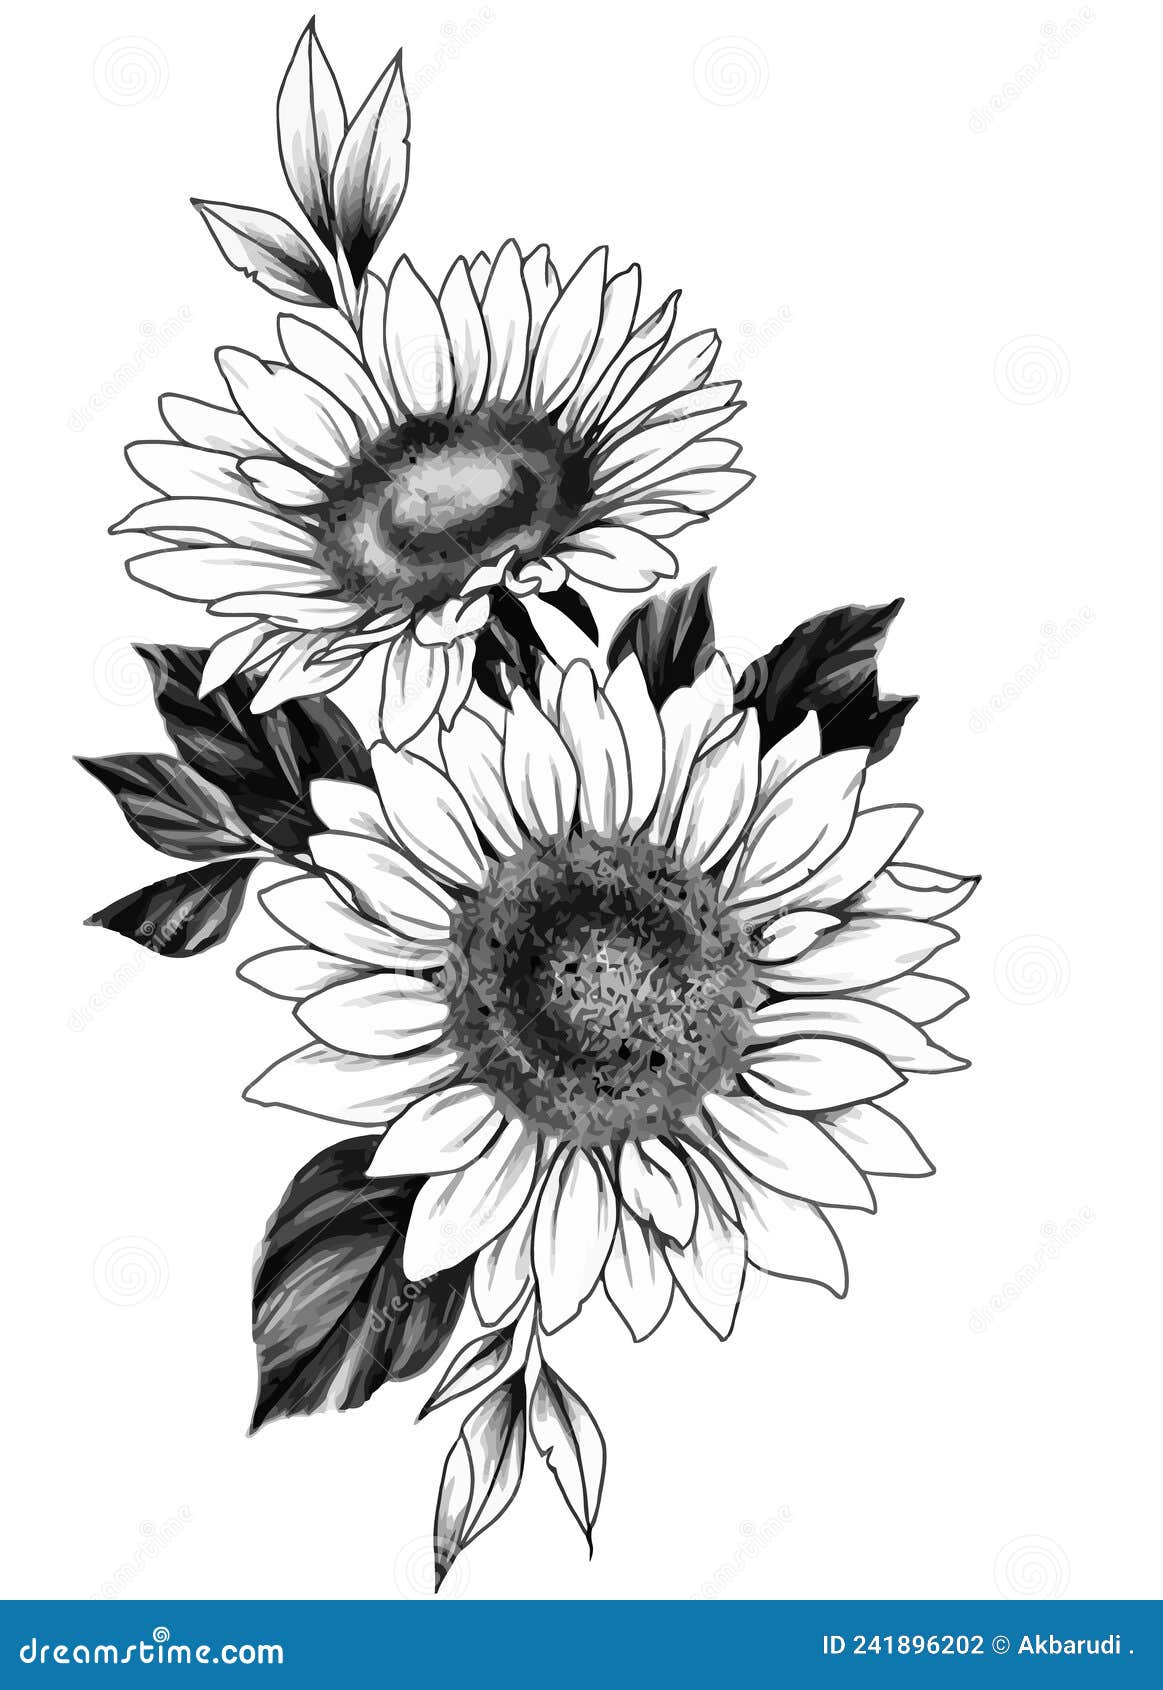 22,776 Sunflower Outline Images, Stock Photos & Vectors | Shutterstock